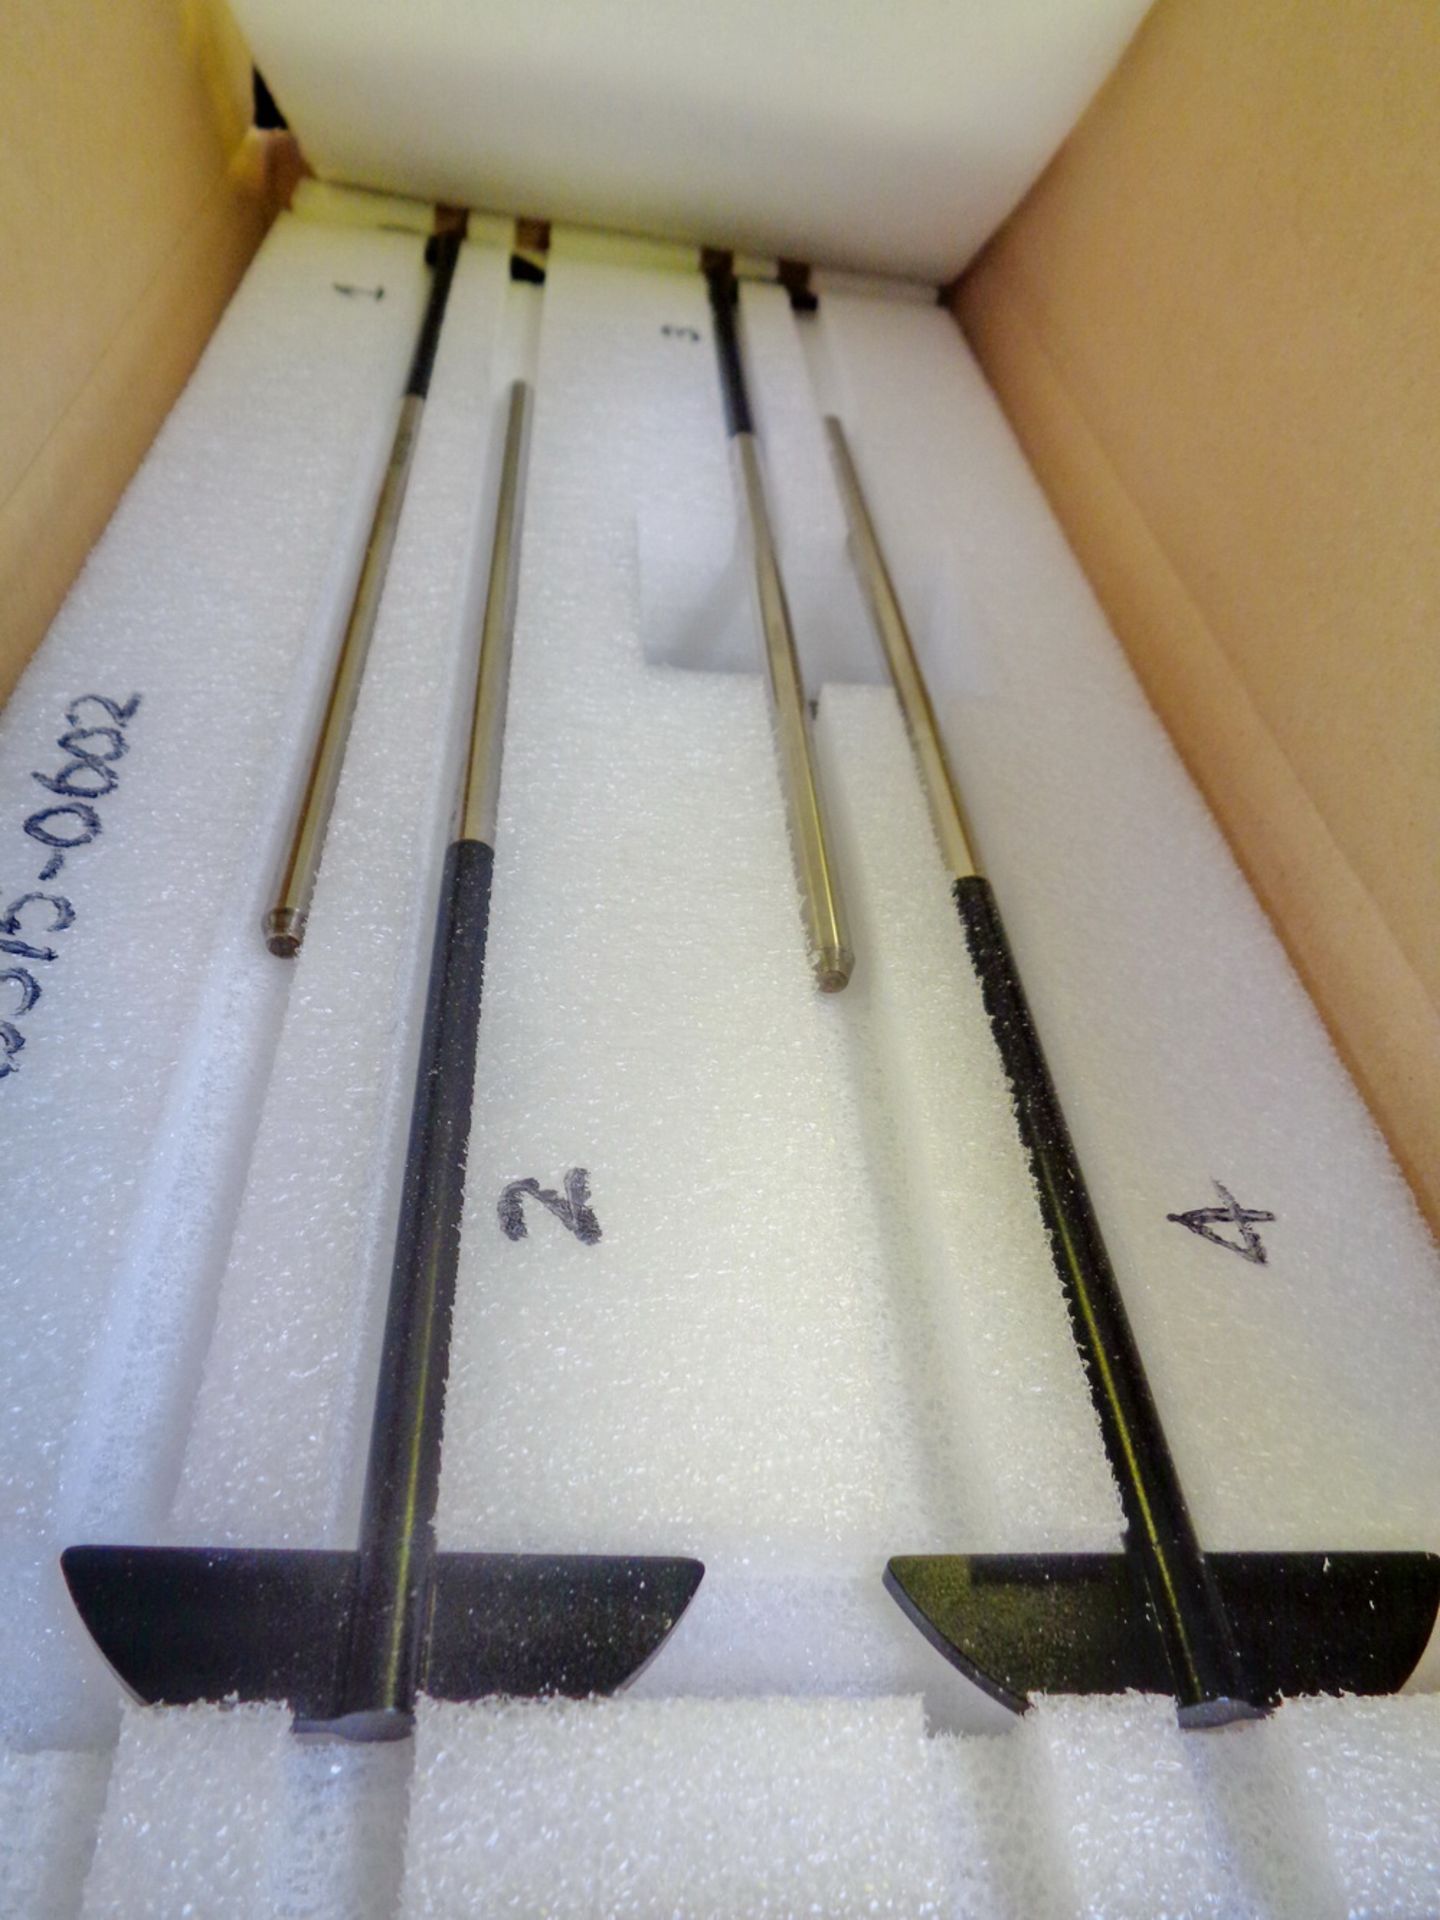 Unused Vankel box of 8 paddle agitators for dissolution system - Image 2 of 3